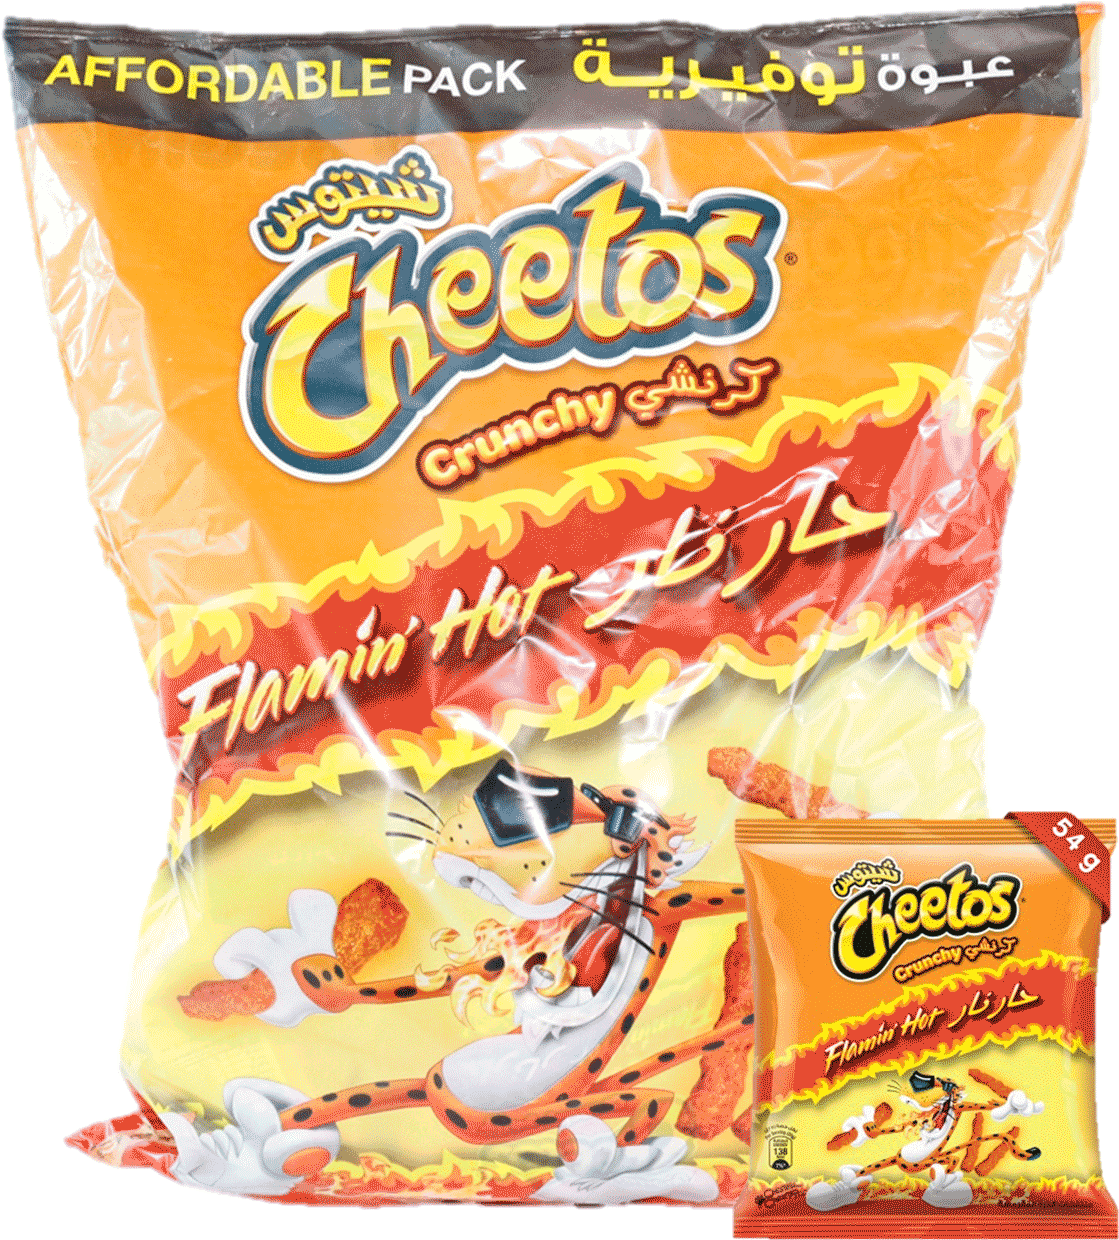 Cheetos Crunchy Crunchy Pack PNG Clipart